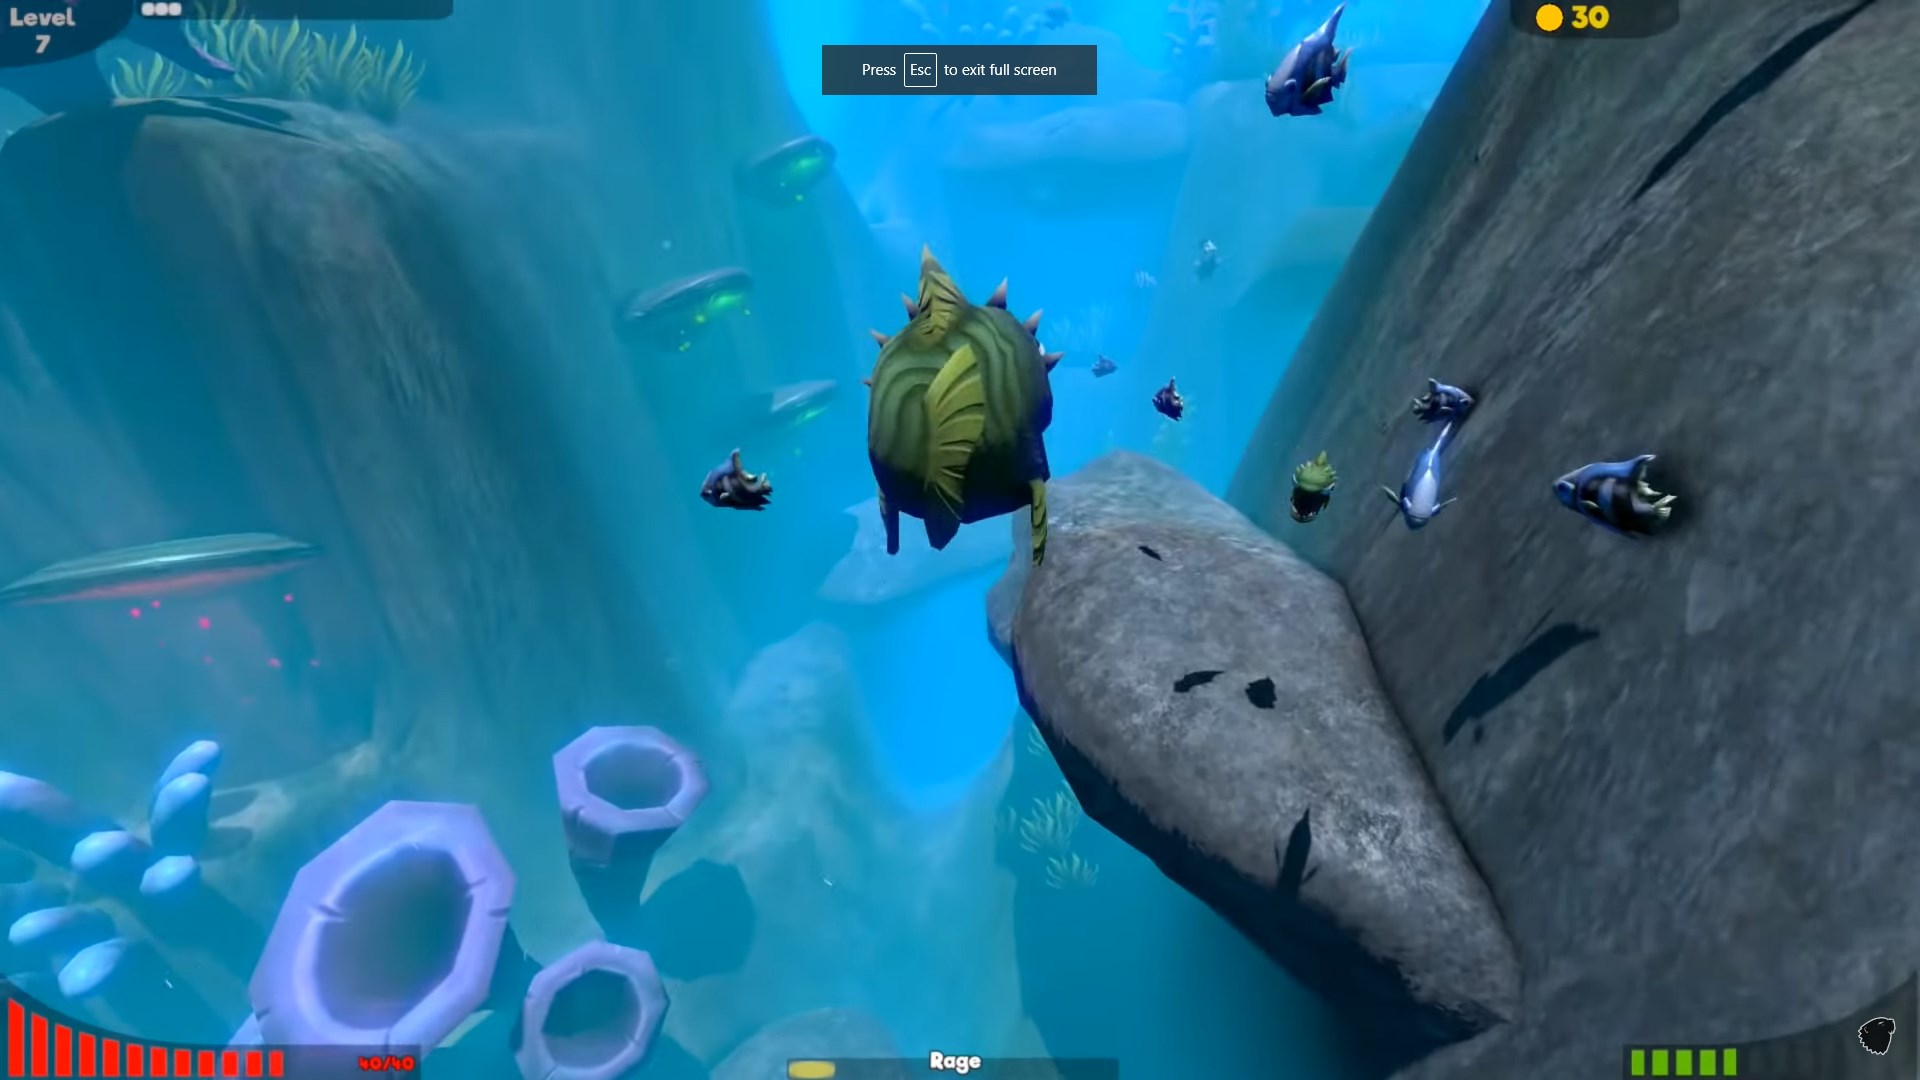 Fish Feed Grow Jogos Xbox One